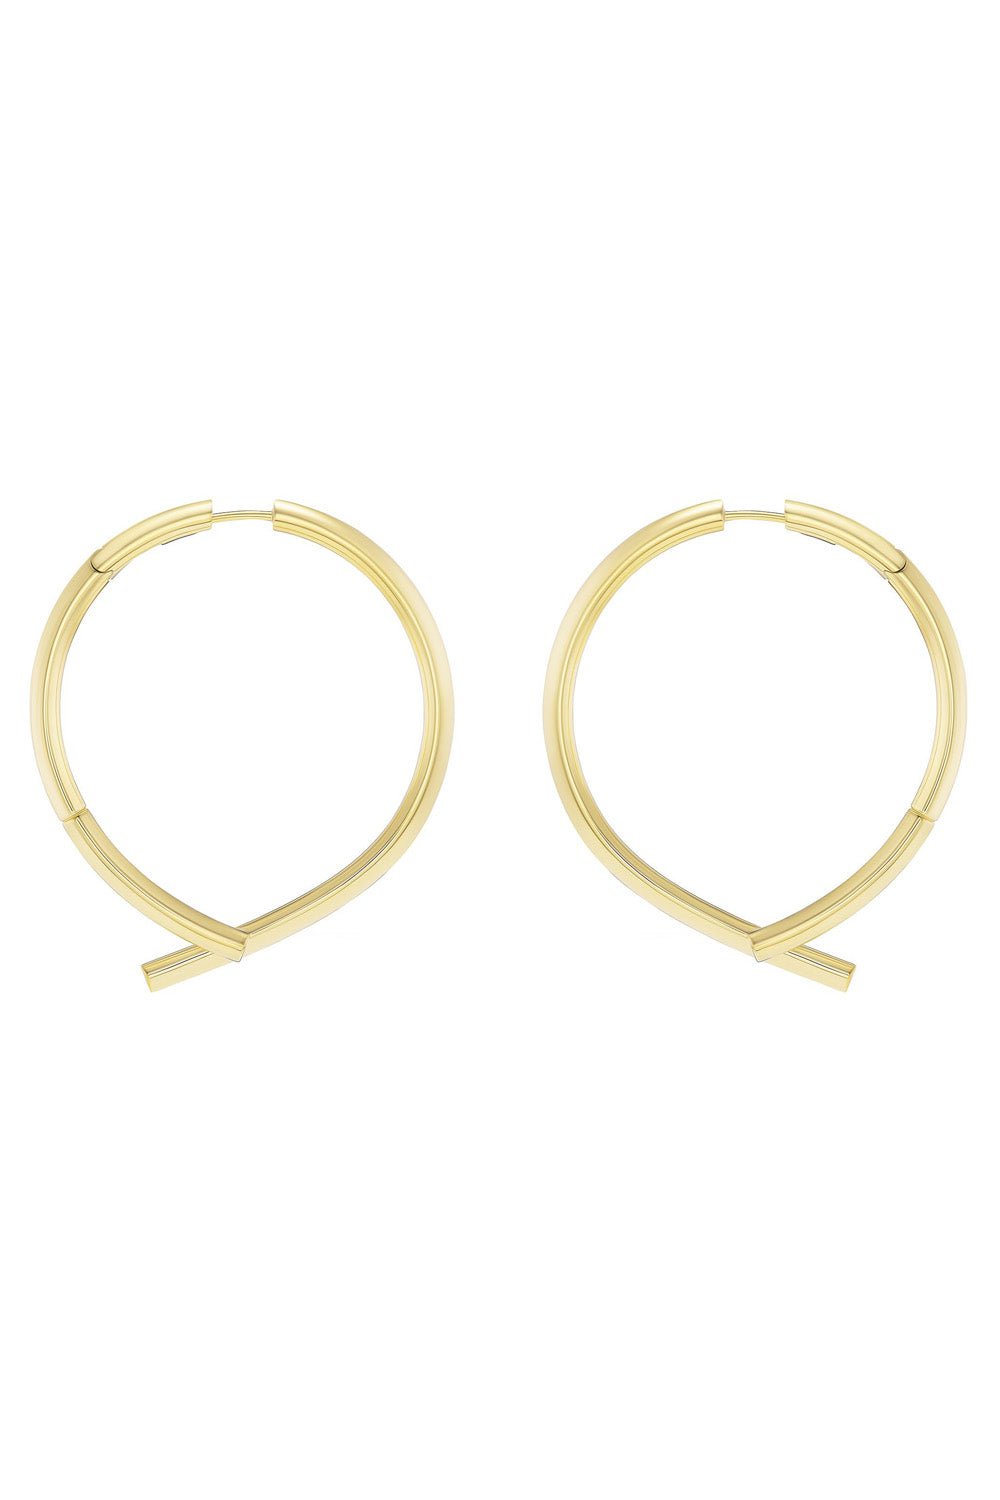 TABAYER-Oera Orb Earrings-YELLOW GOLD